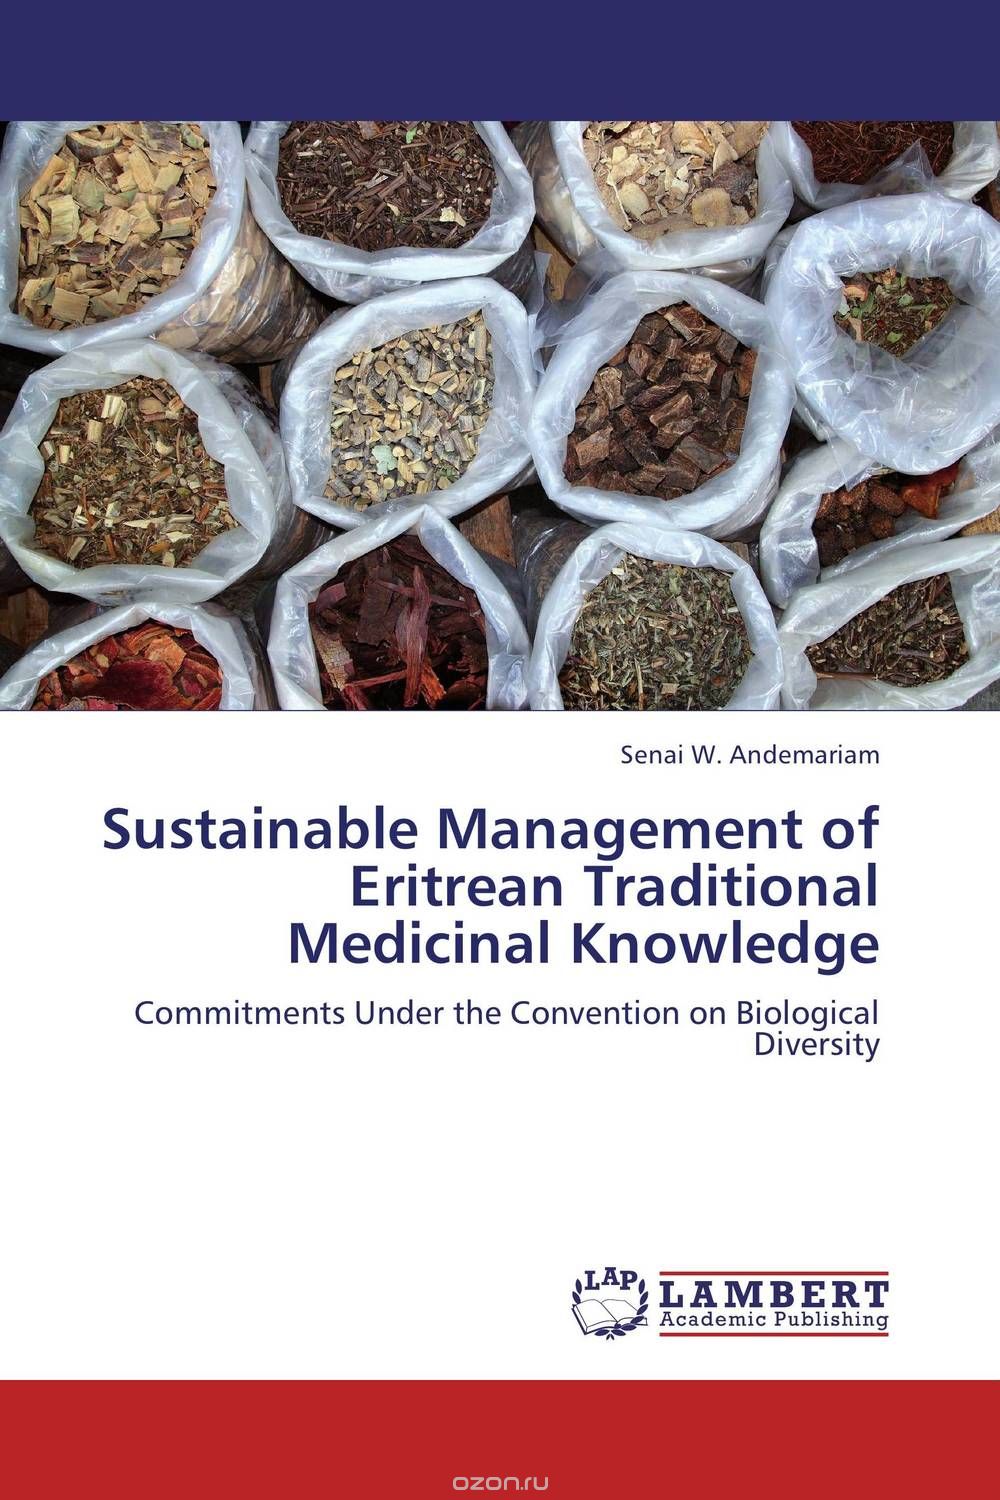 Скачать книгу "Sustainable Management of Eritrean Traditional Medicinal Knowledge"